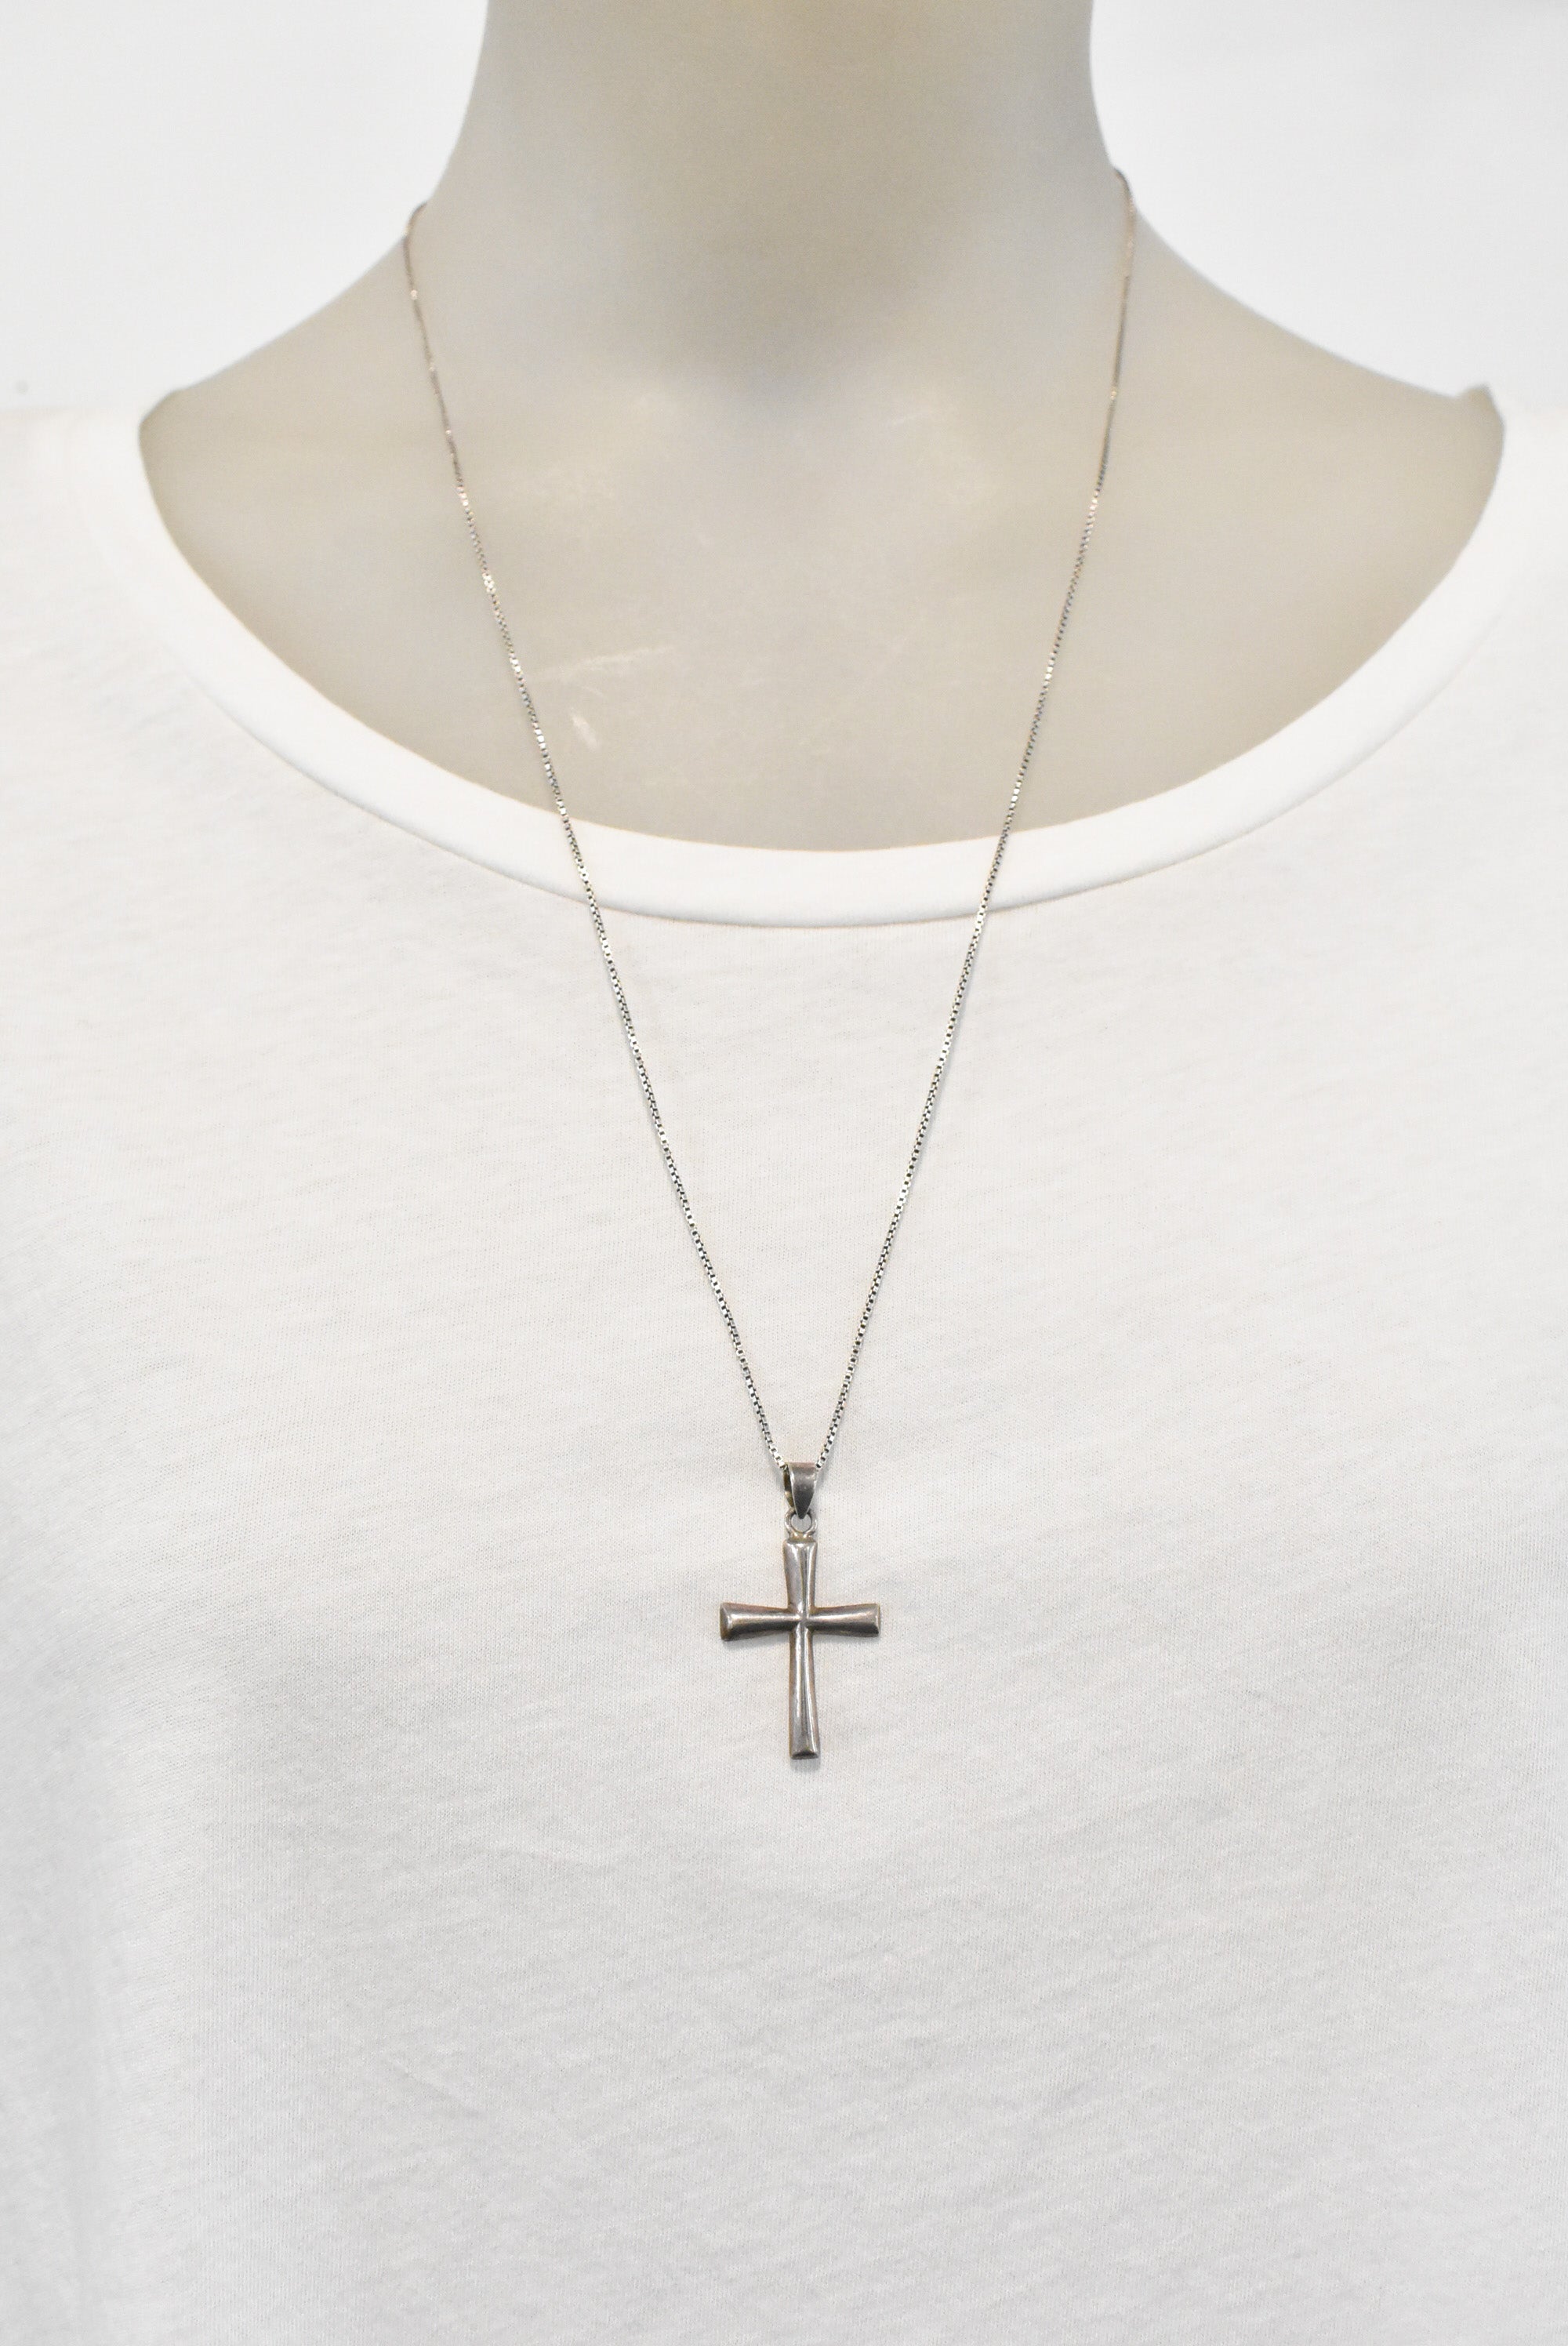 Gold Cross Necklace, Chunky Italian Cross Pendant Necklace, Religious Cross  Men Women Necklace, Rosary Pendant, Spiritual Gift, Matching Set - Etsy